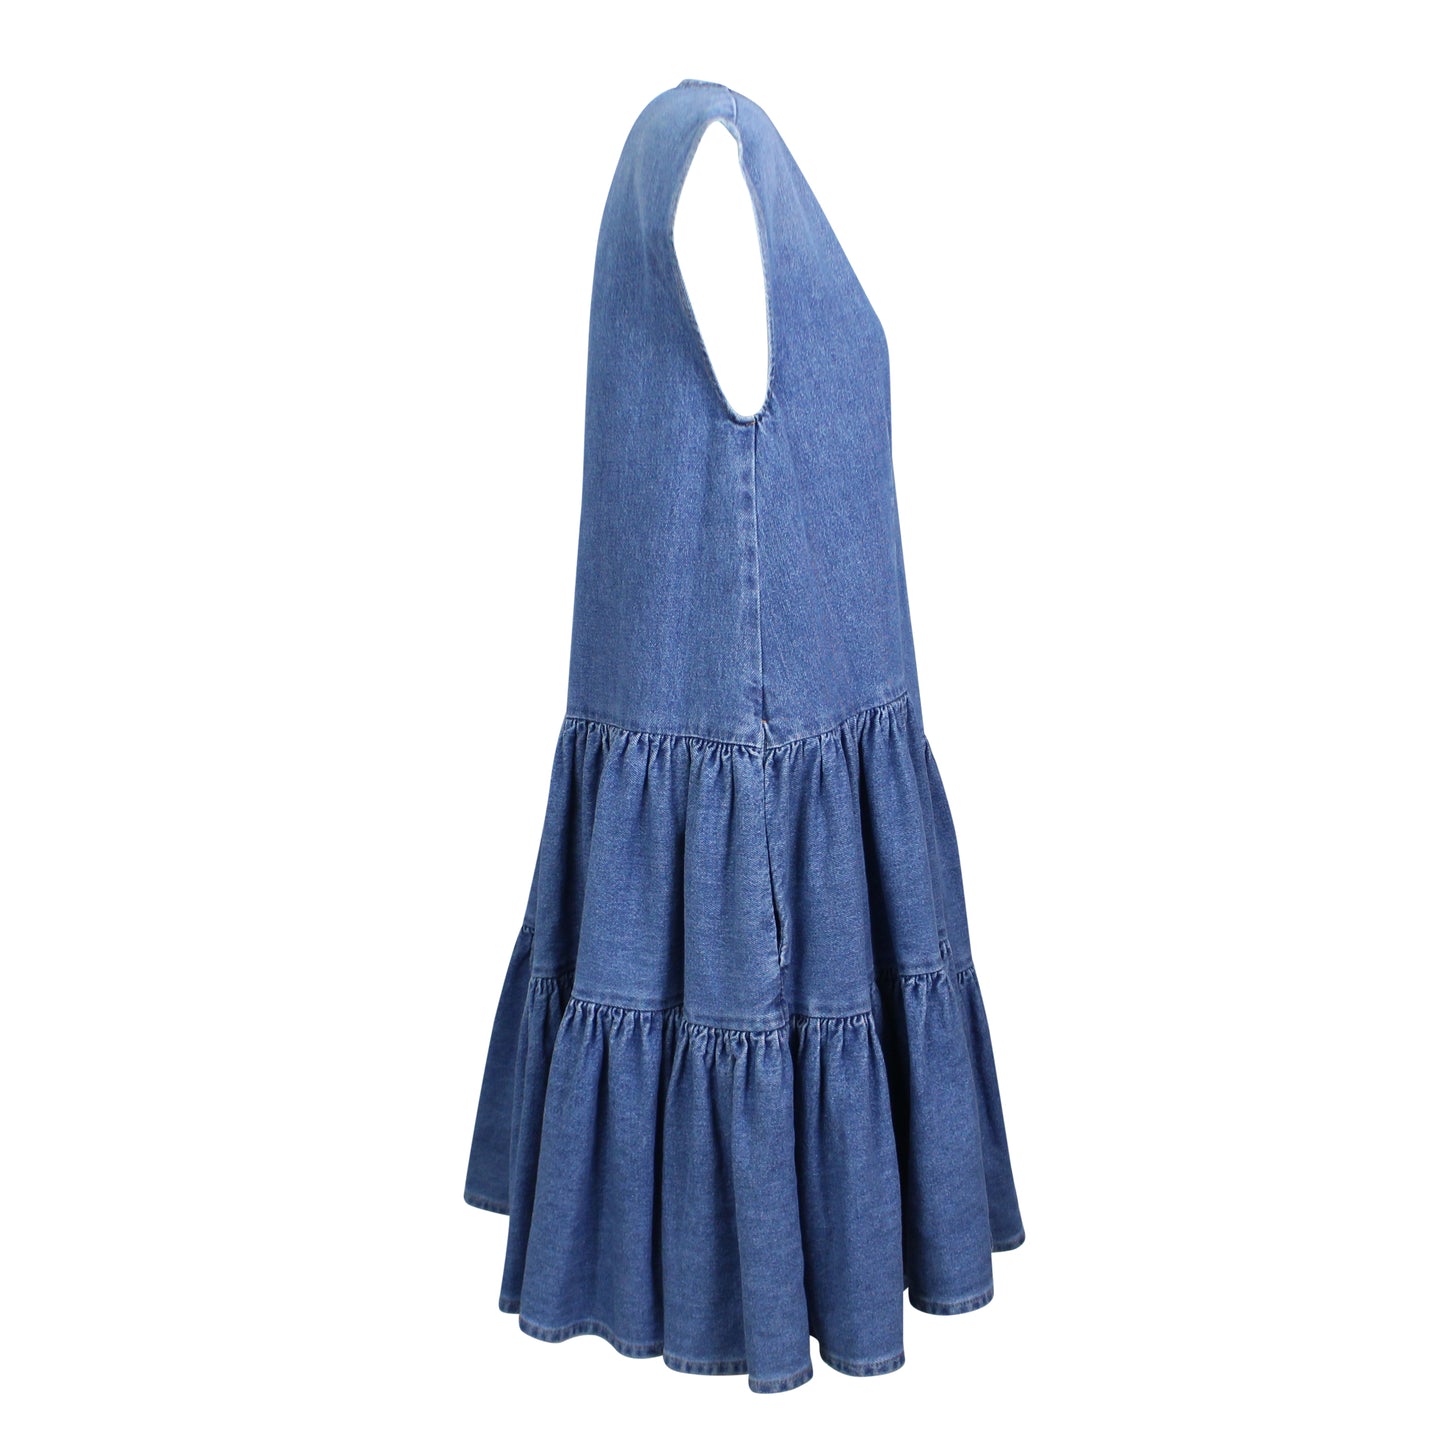 Mm6 Maison Margiela Denim Sleeveless Dress - Blue